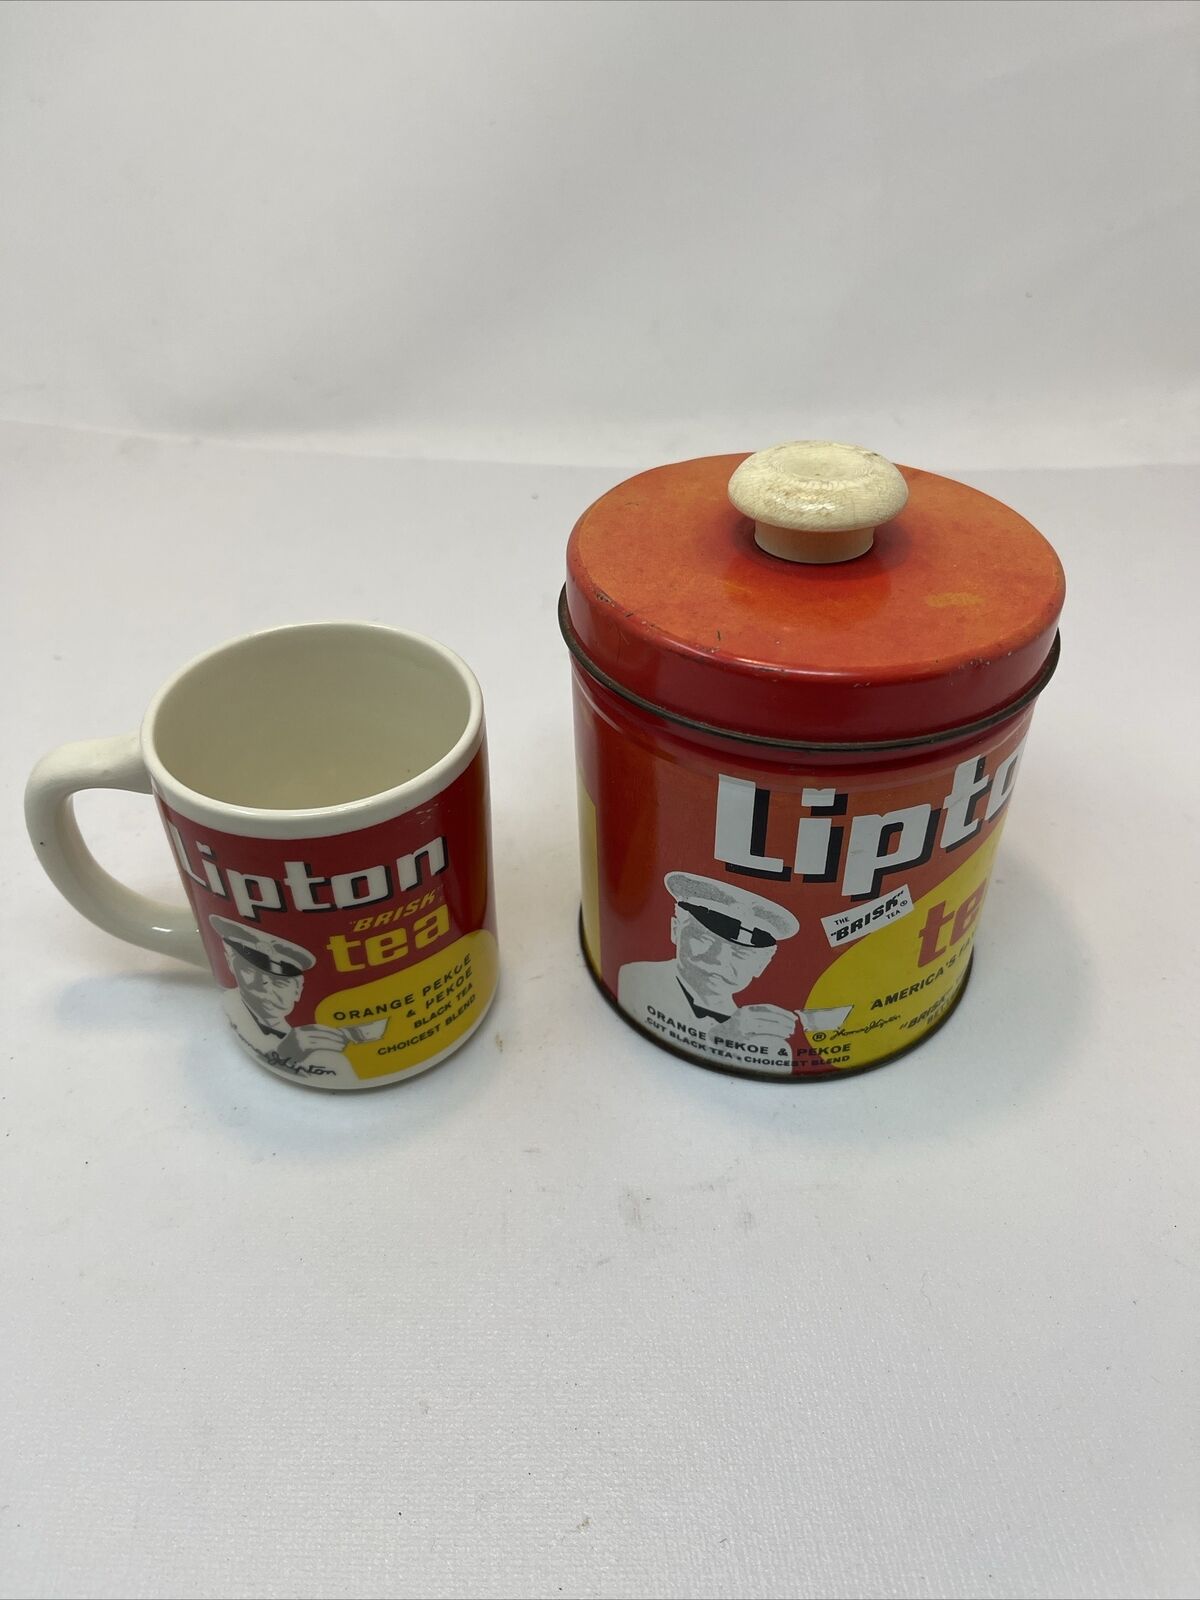 Vintage Lipton Tea Promo Tin Canister & Mug